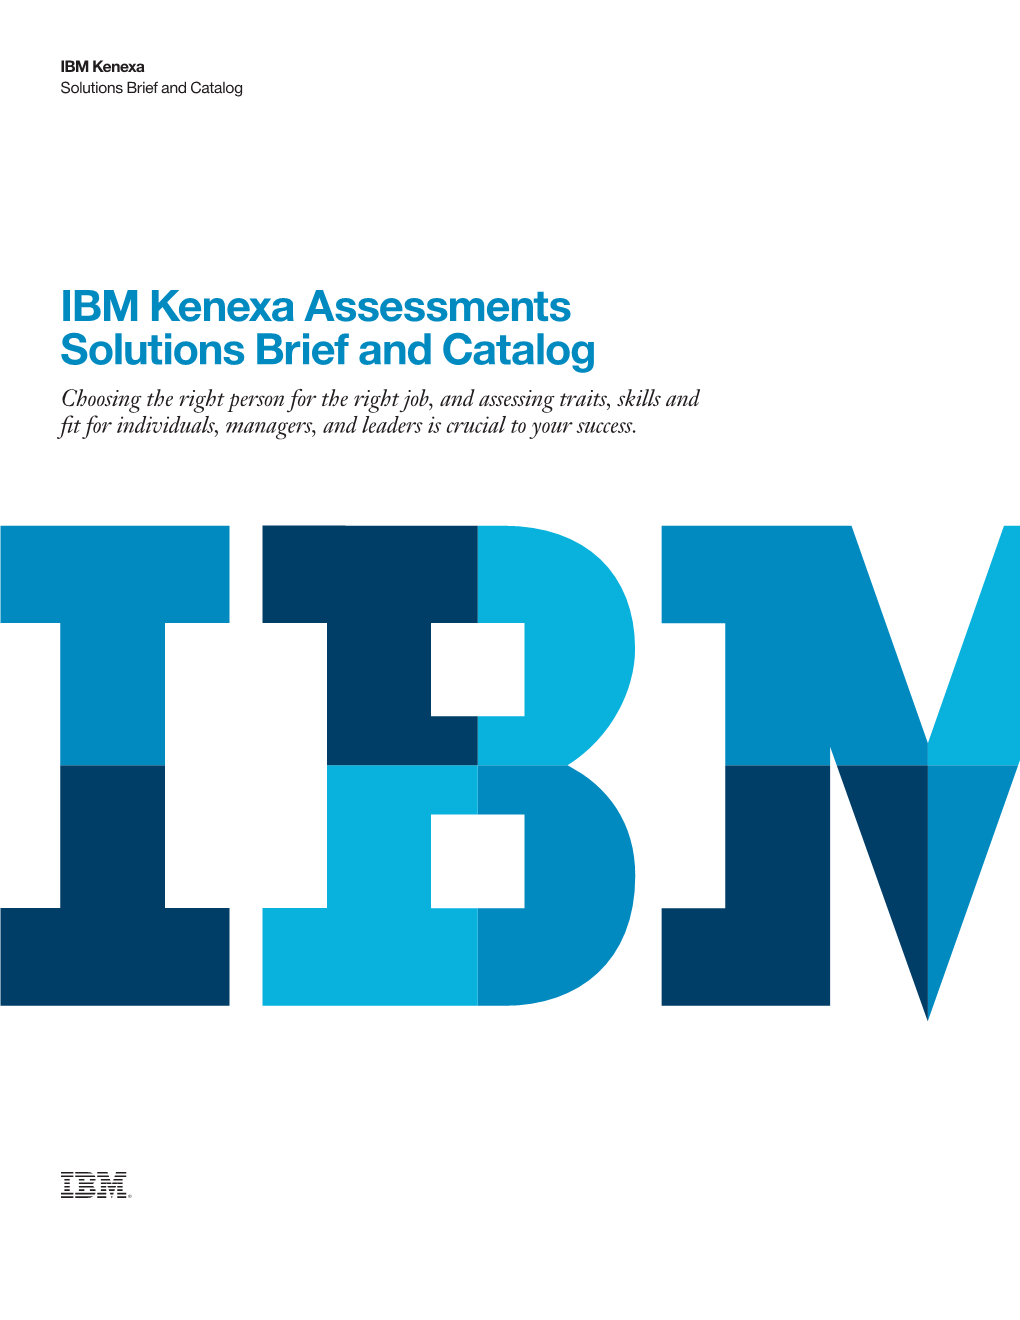 IBM Kenexa Assessments Solutions Brief and Catalog